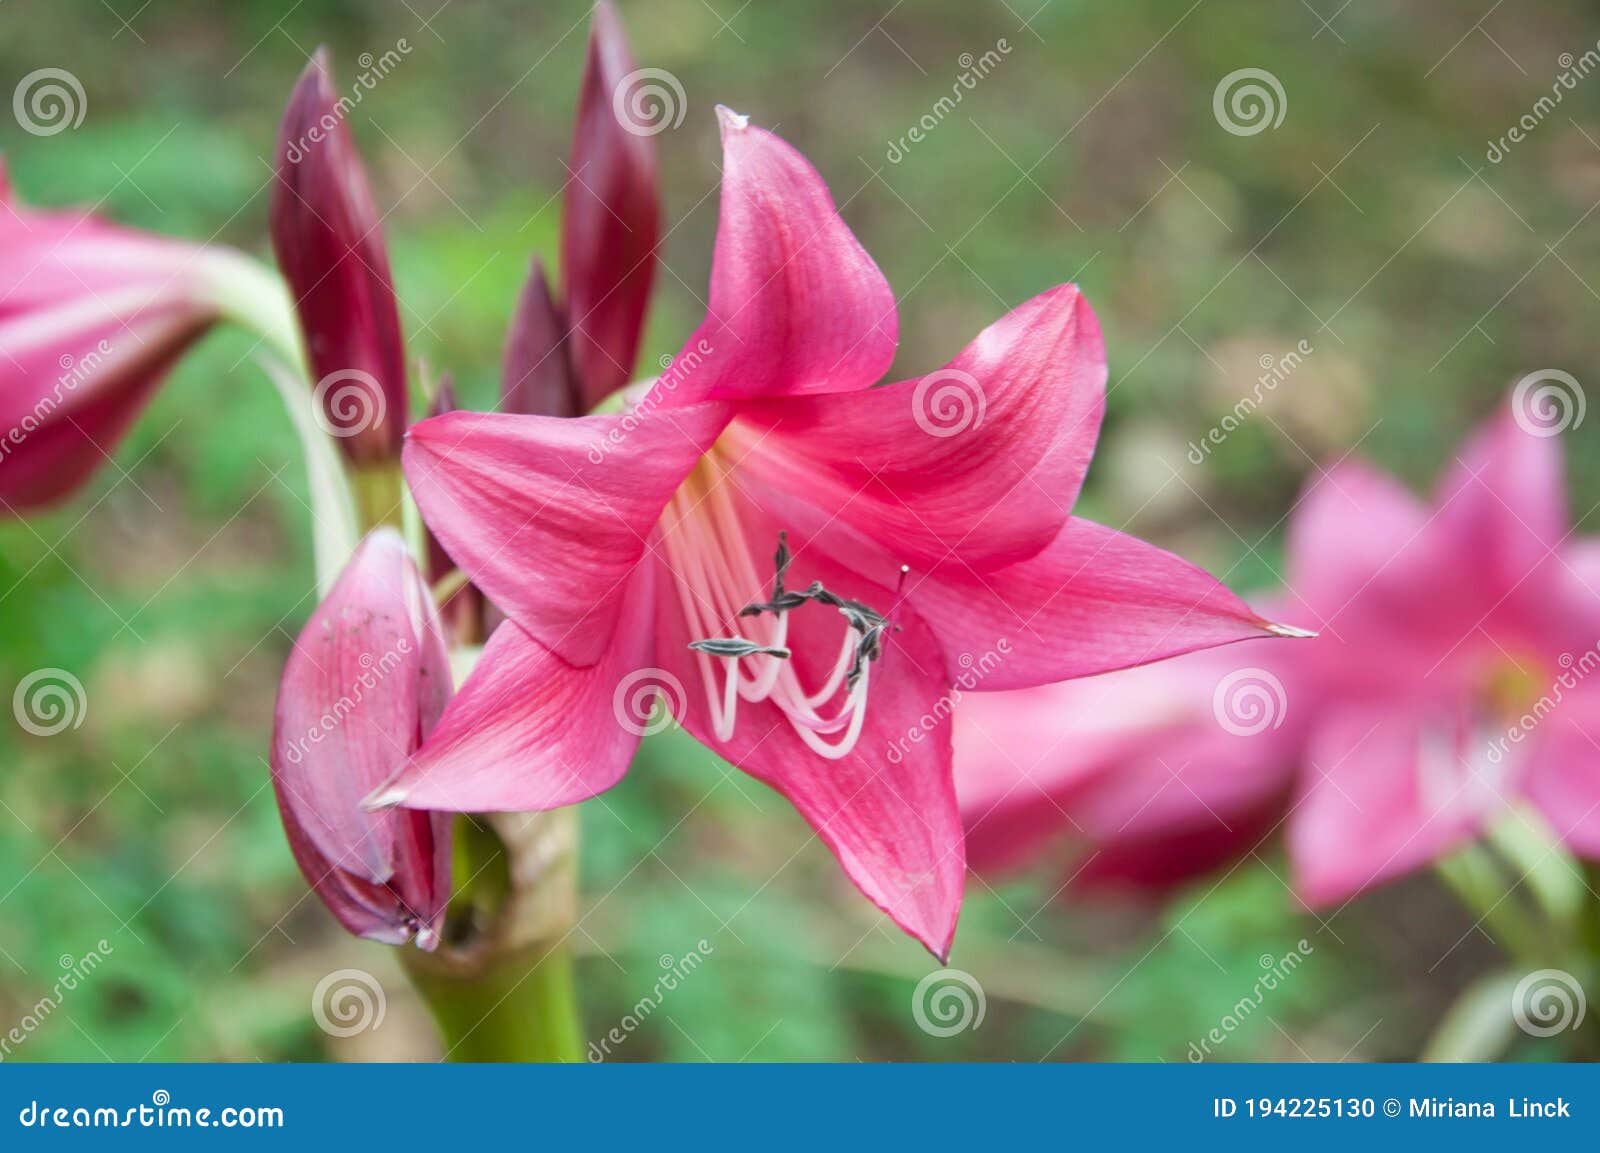 portrait of a flower of pink lirio species